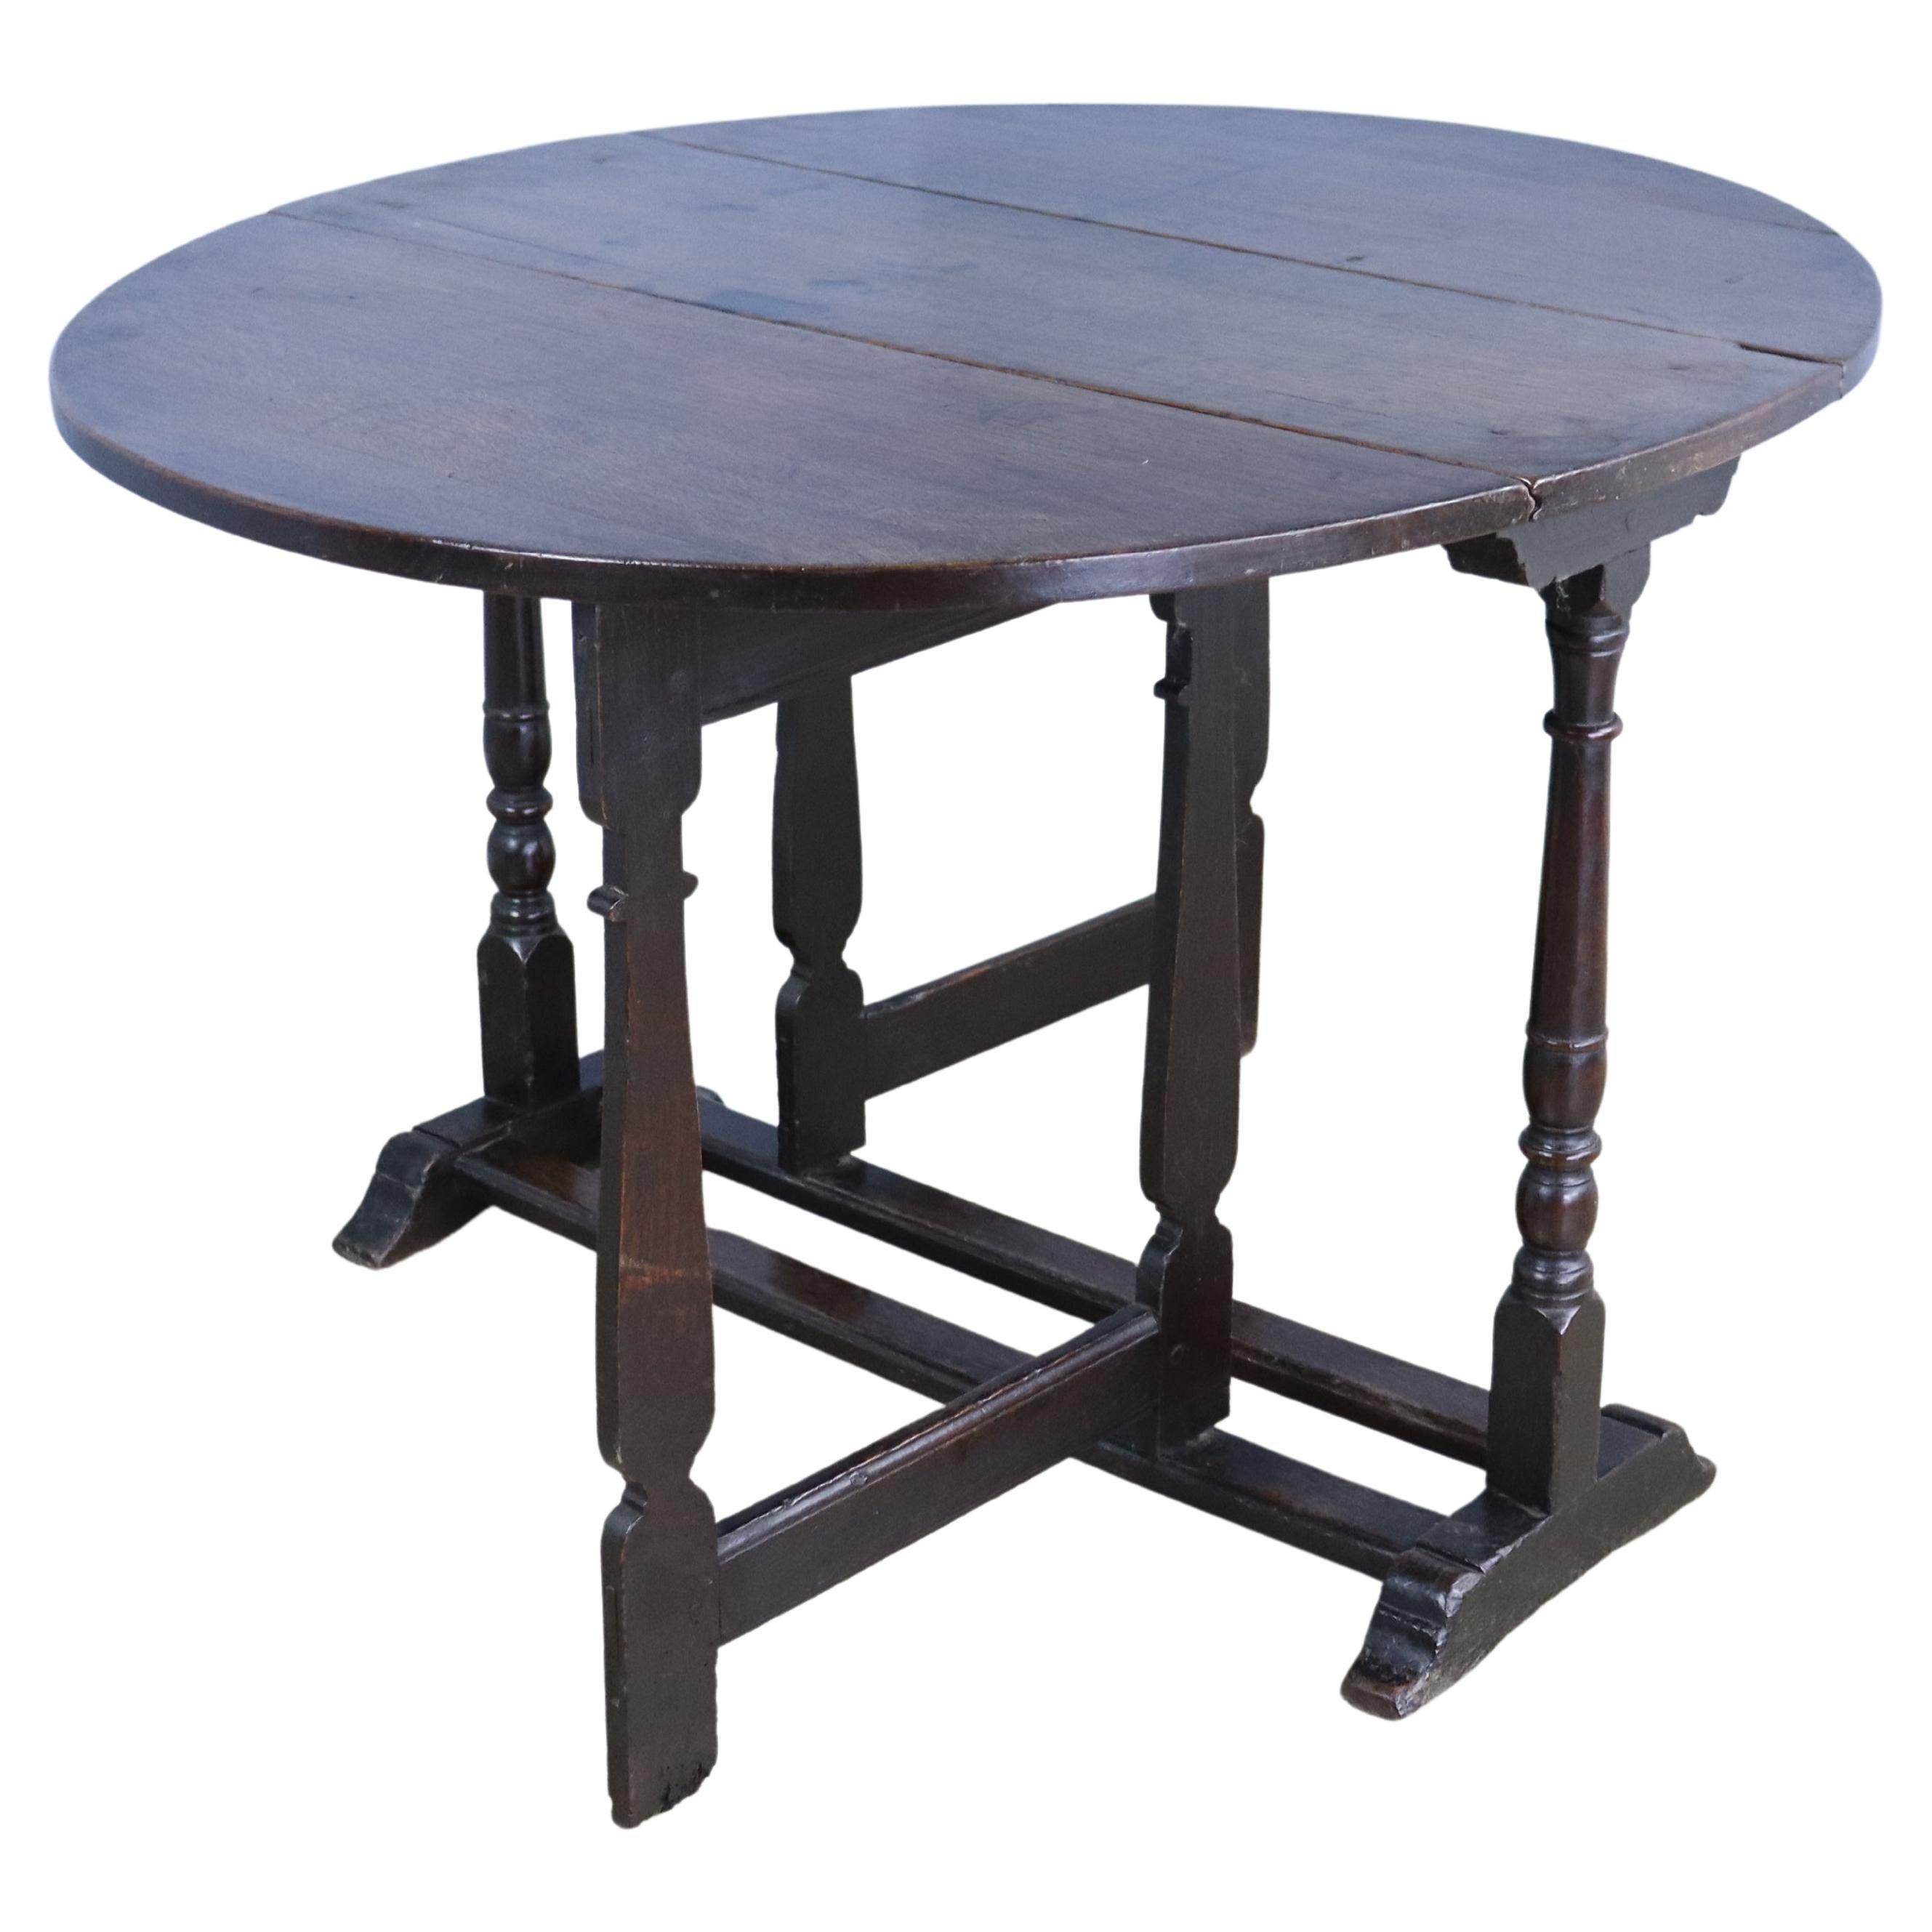 Antique and Vintage Drop-leaf and Pembroke Tables - 824 For Sale 